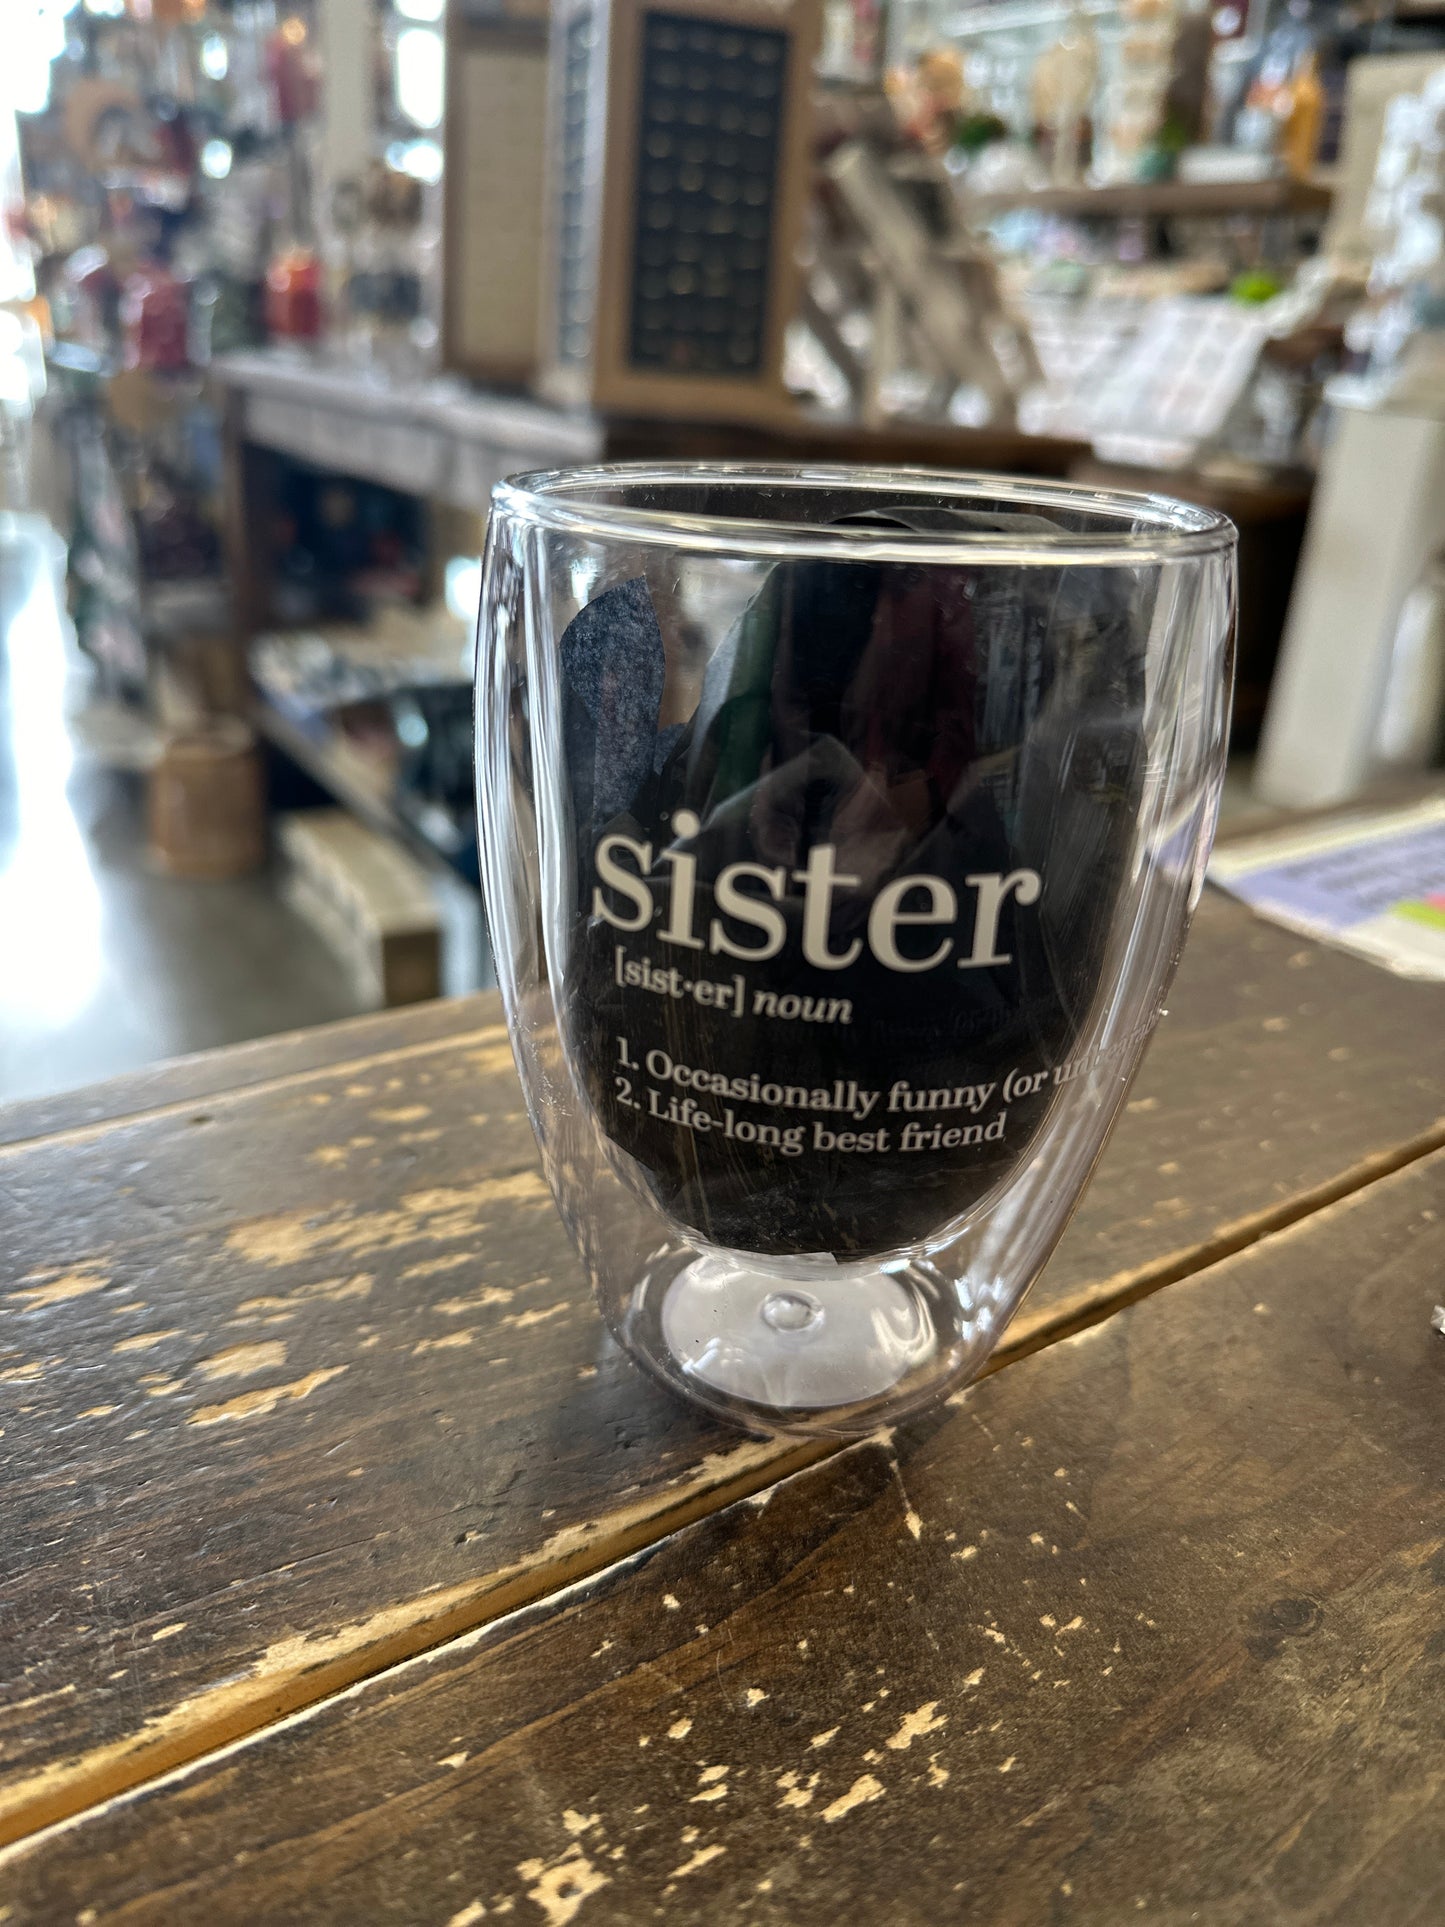 Sister [noun] - Wine Glass